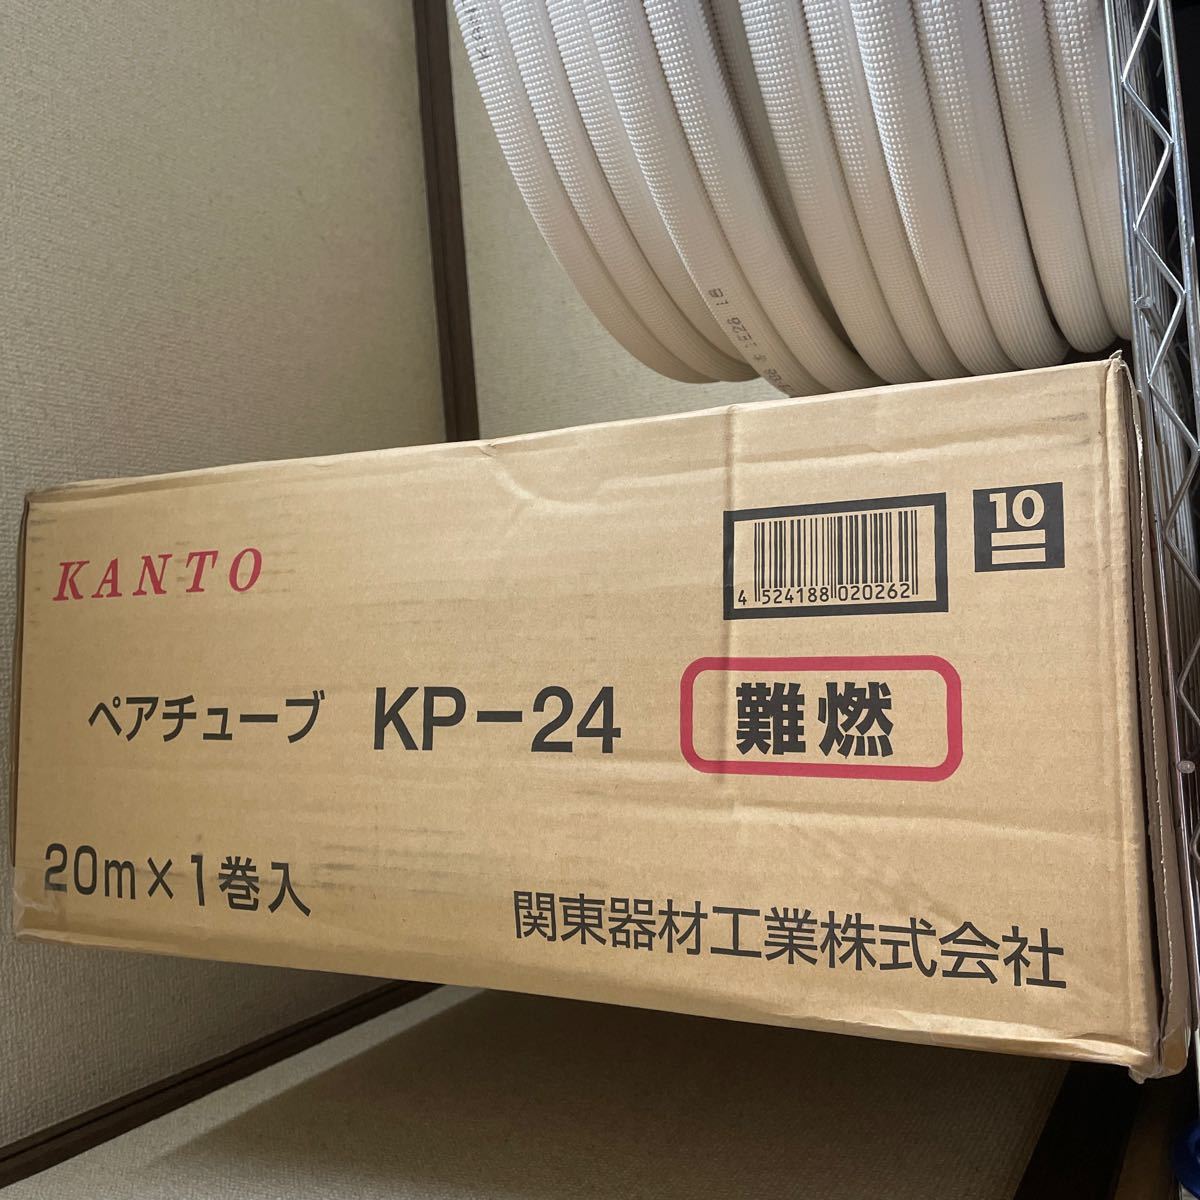 KANTO ペアコイル 2分3分 KP-23 2巻 KP-24 1巻 合計3巻セット